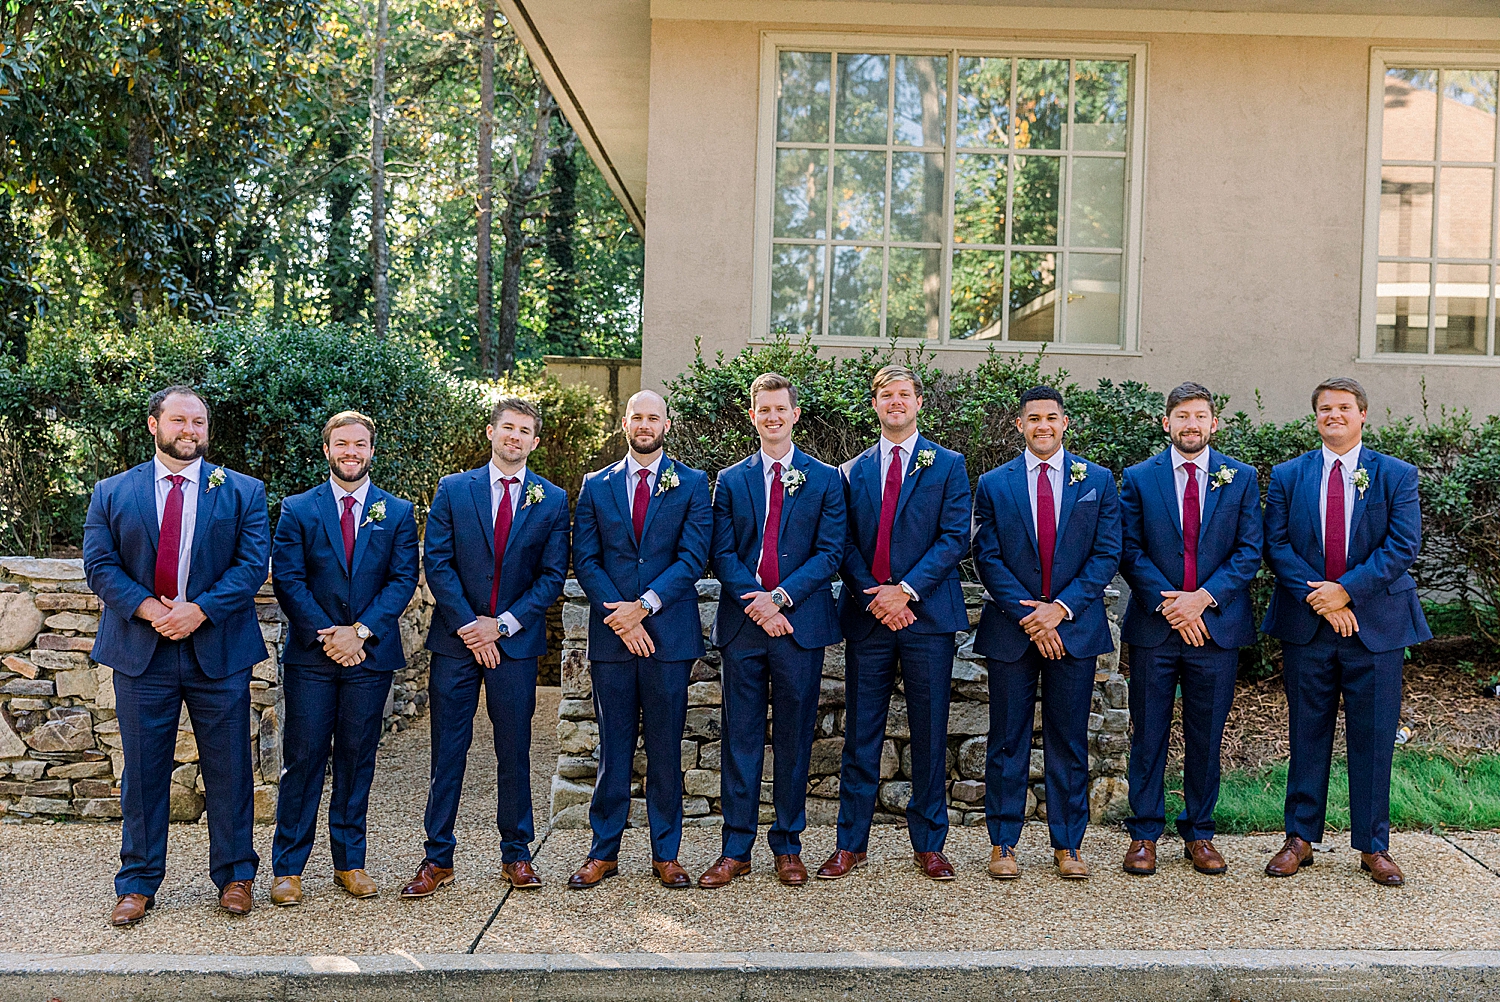 groom poses with groomsmen in navy suits